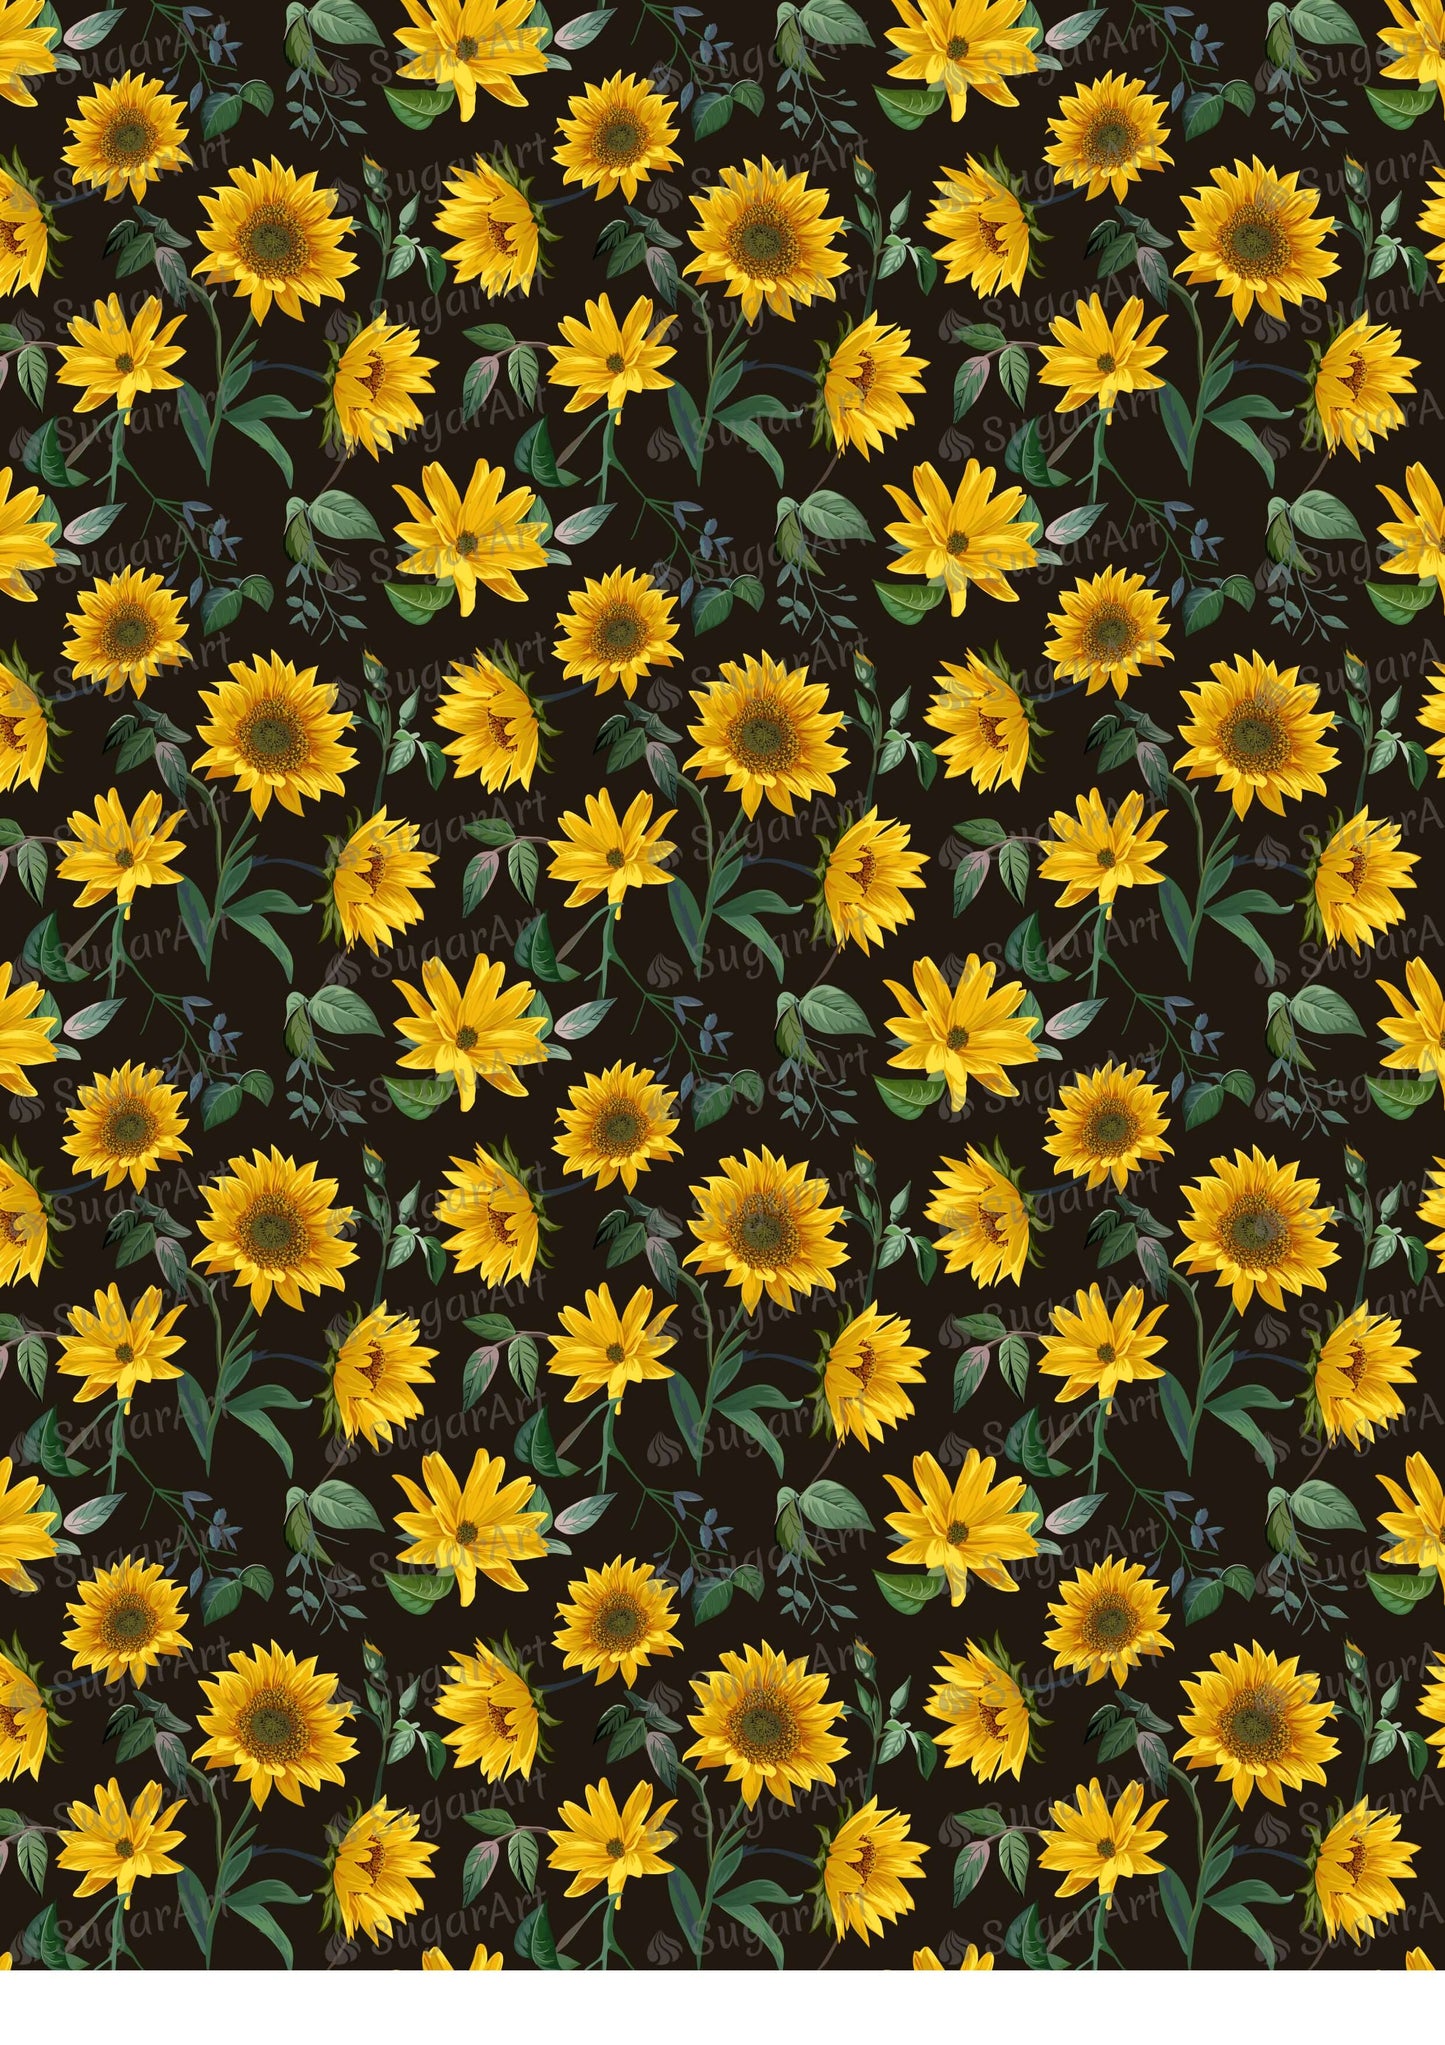 Sunflowers - BSA070.